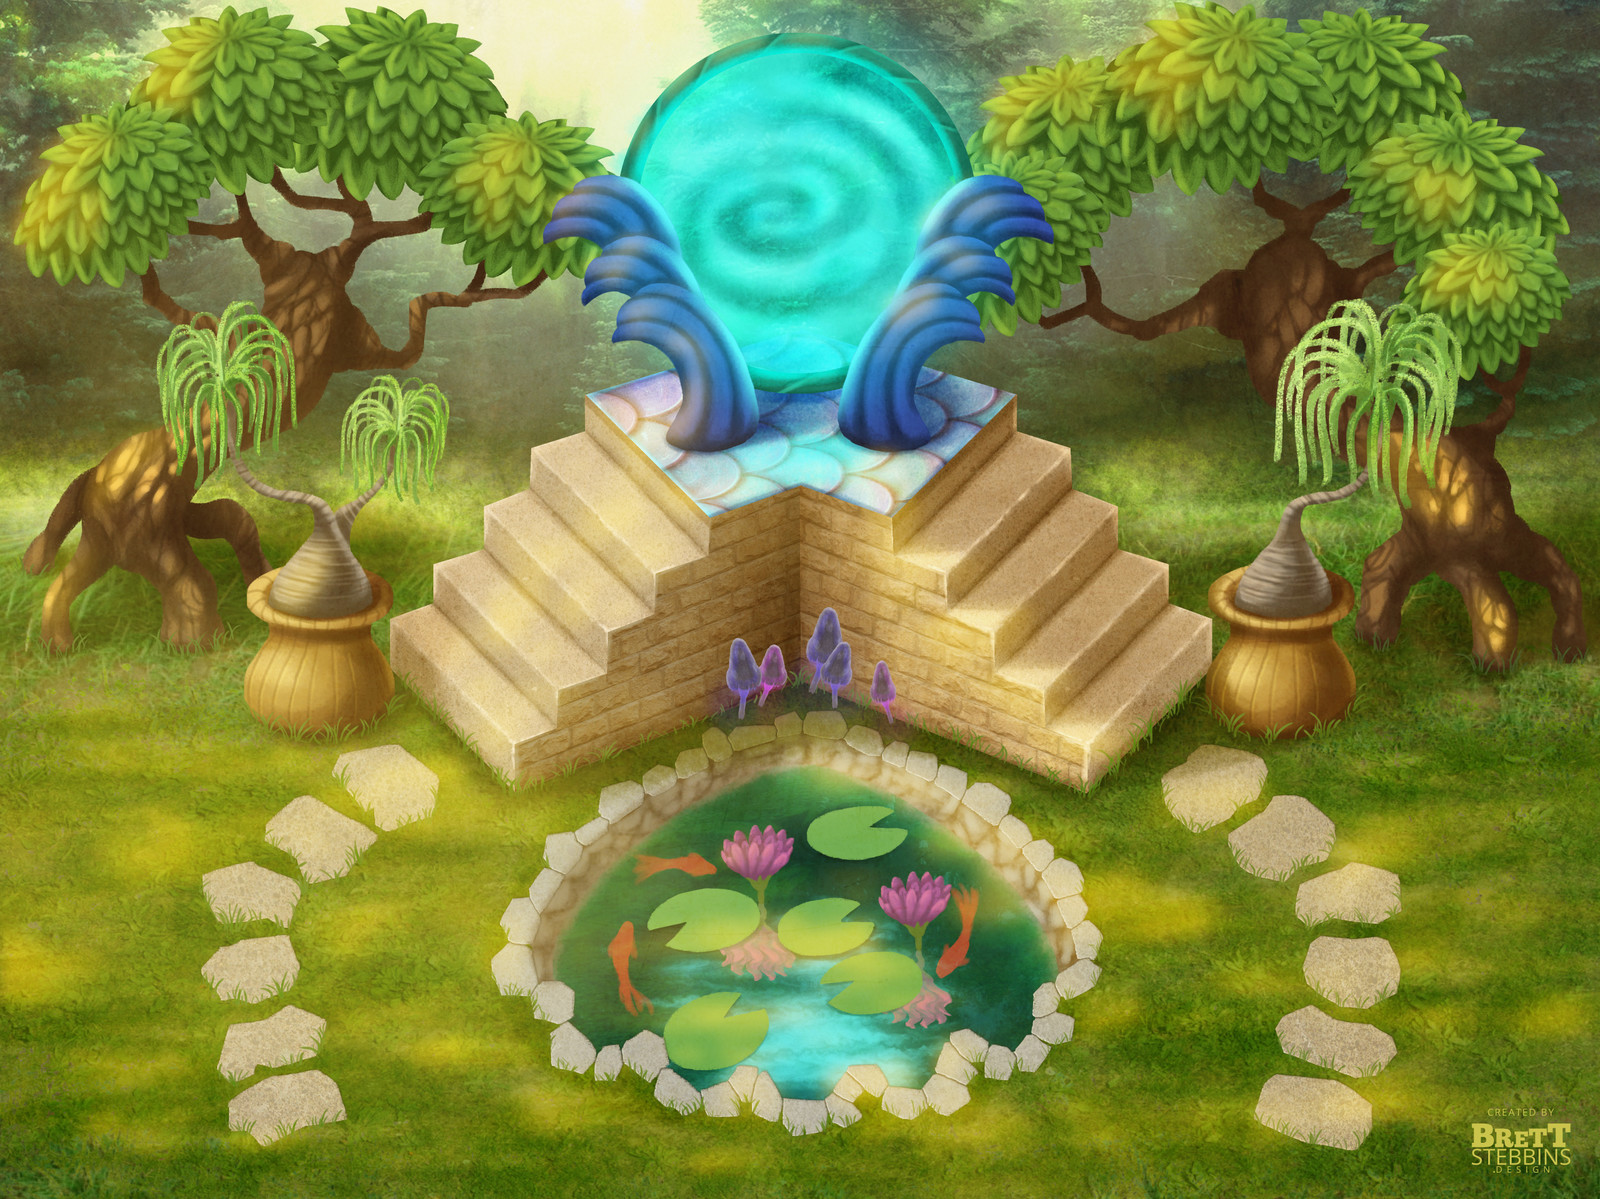 Luminare Saga - Village of Die Nox - The Portal